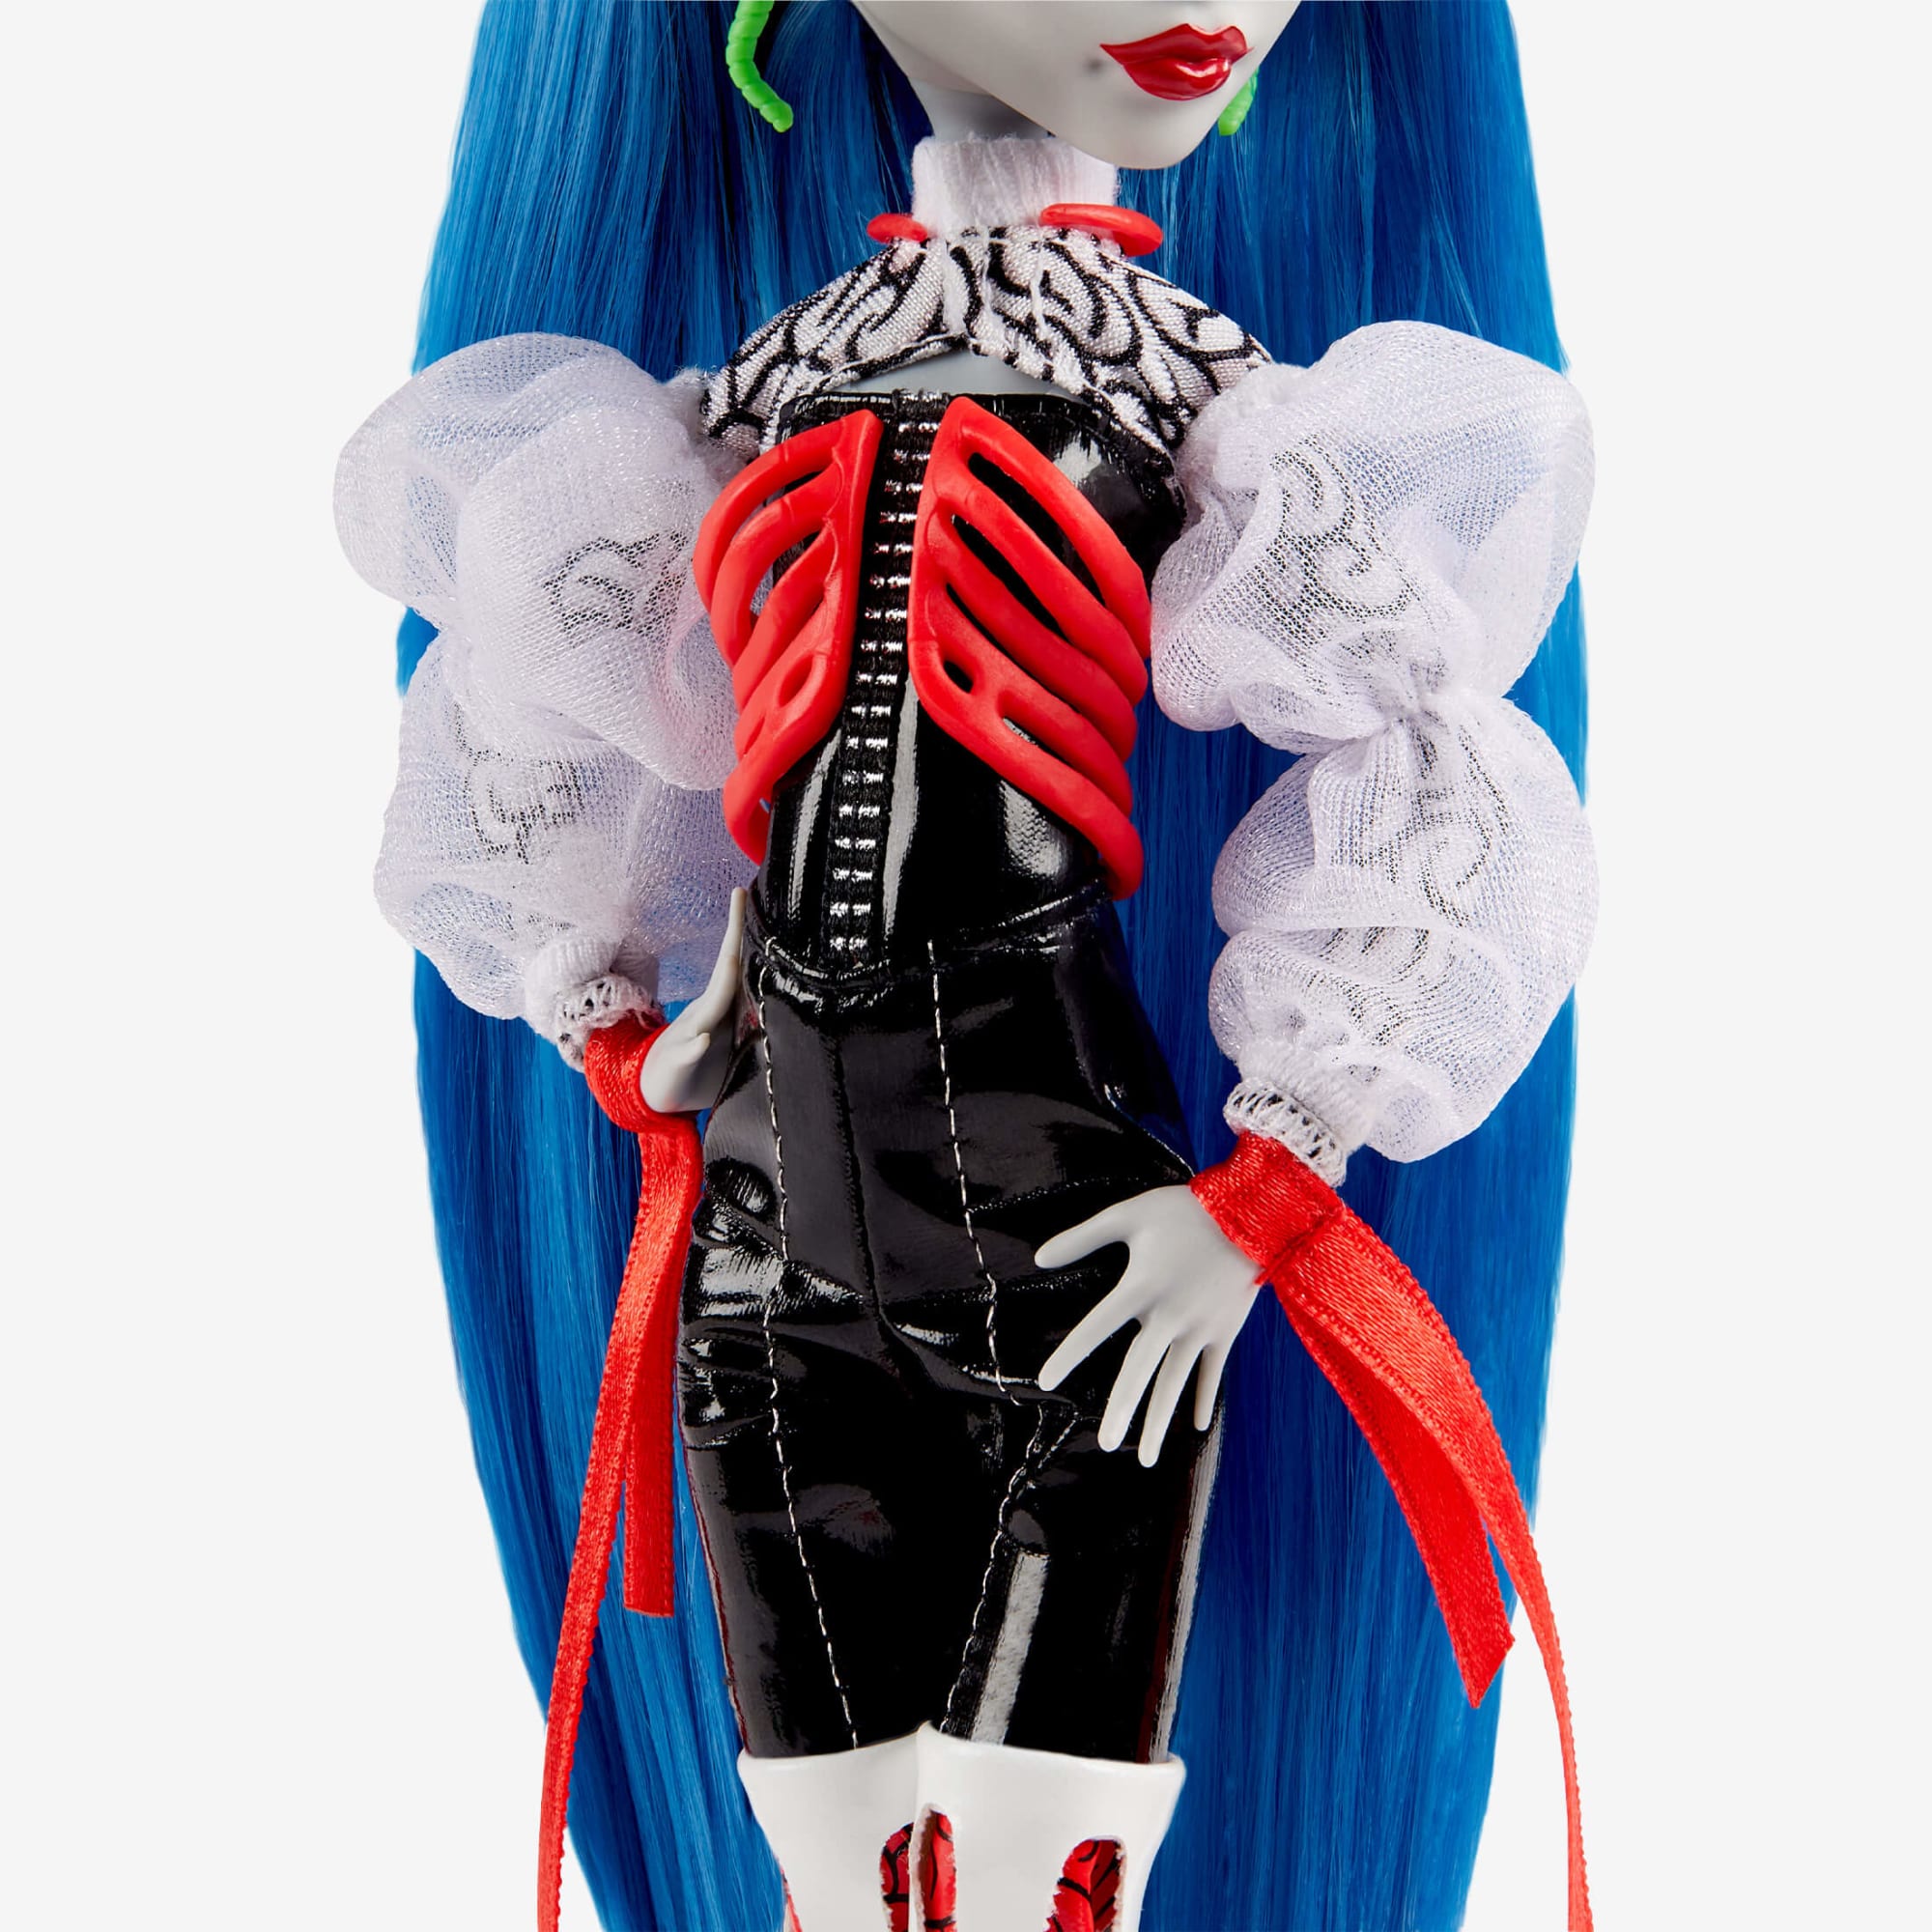 PRÉ-VENDA Boneca Monster High Collectors Ghouluxe Ghoulia Yelps - Mattel